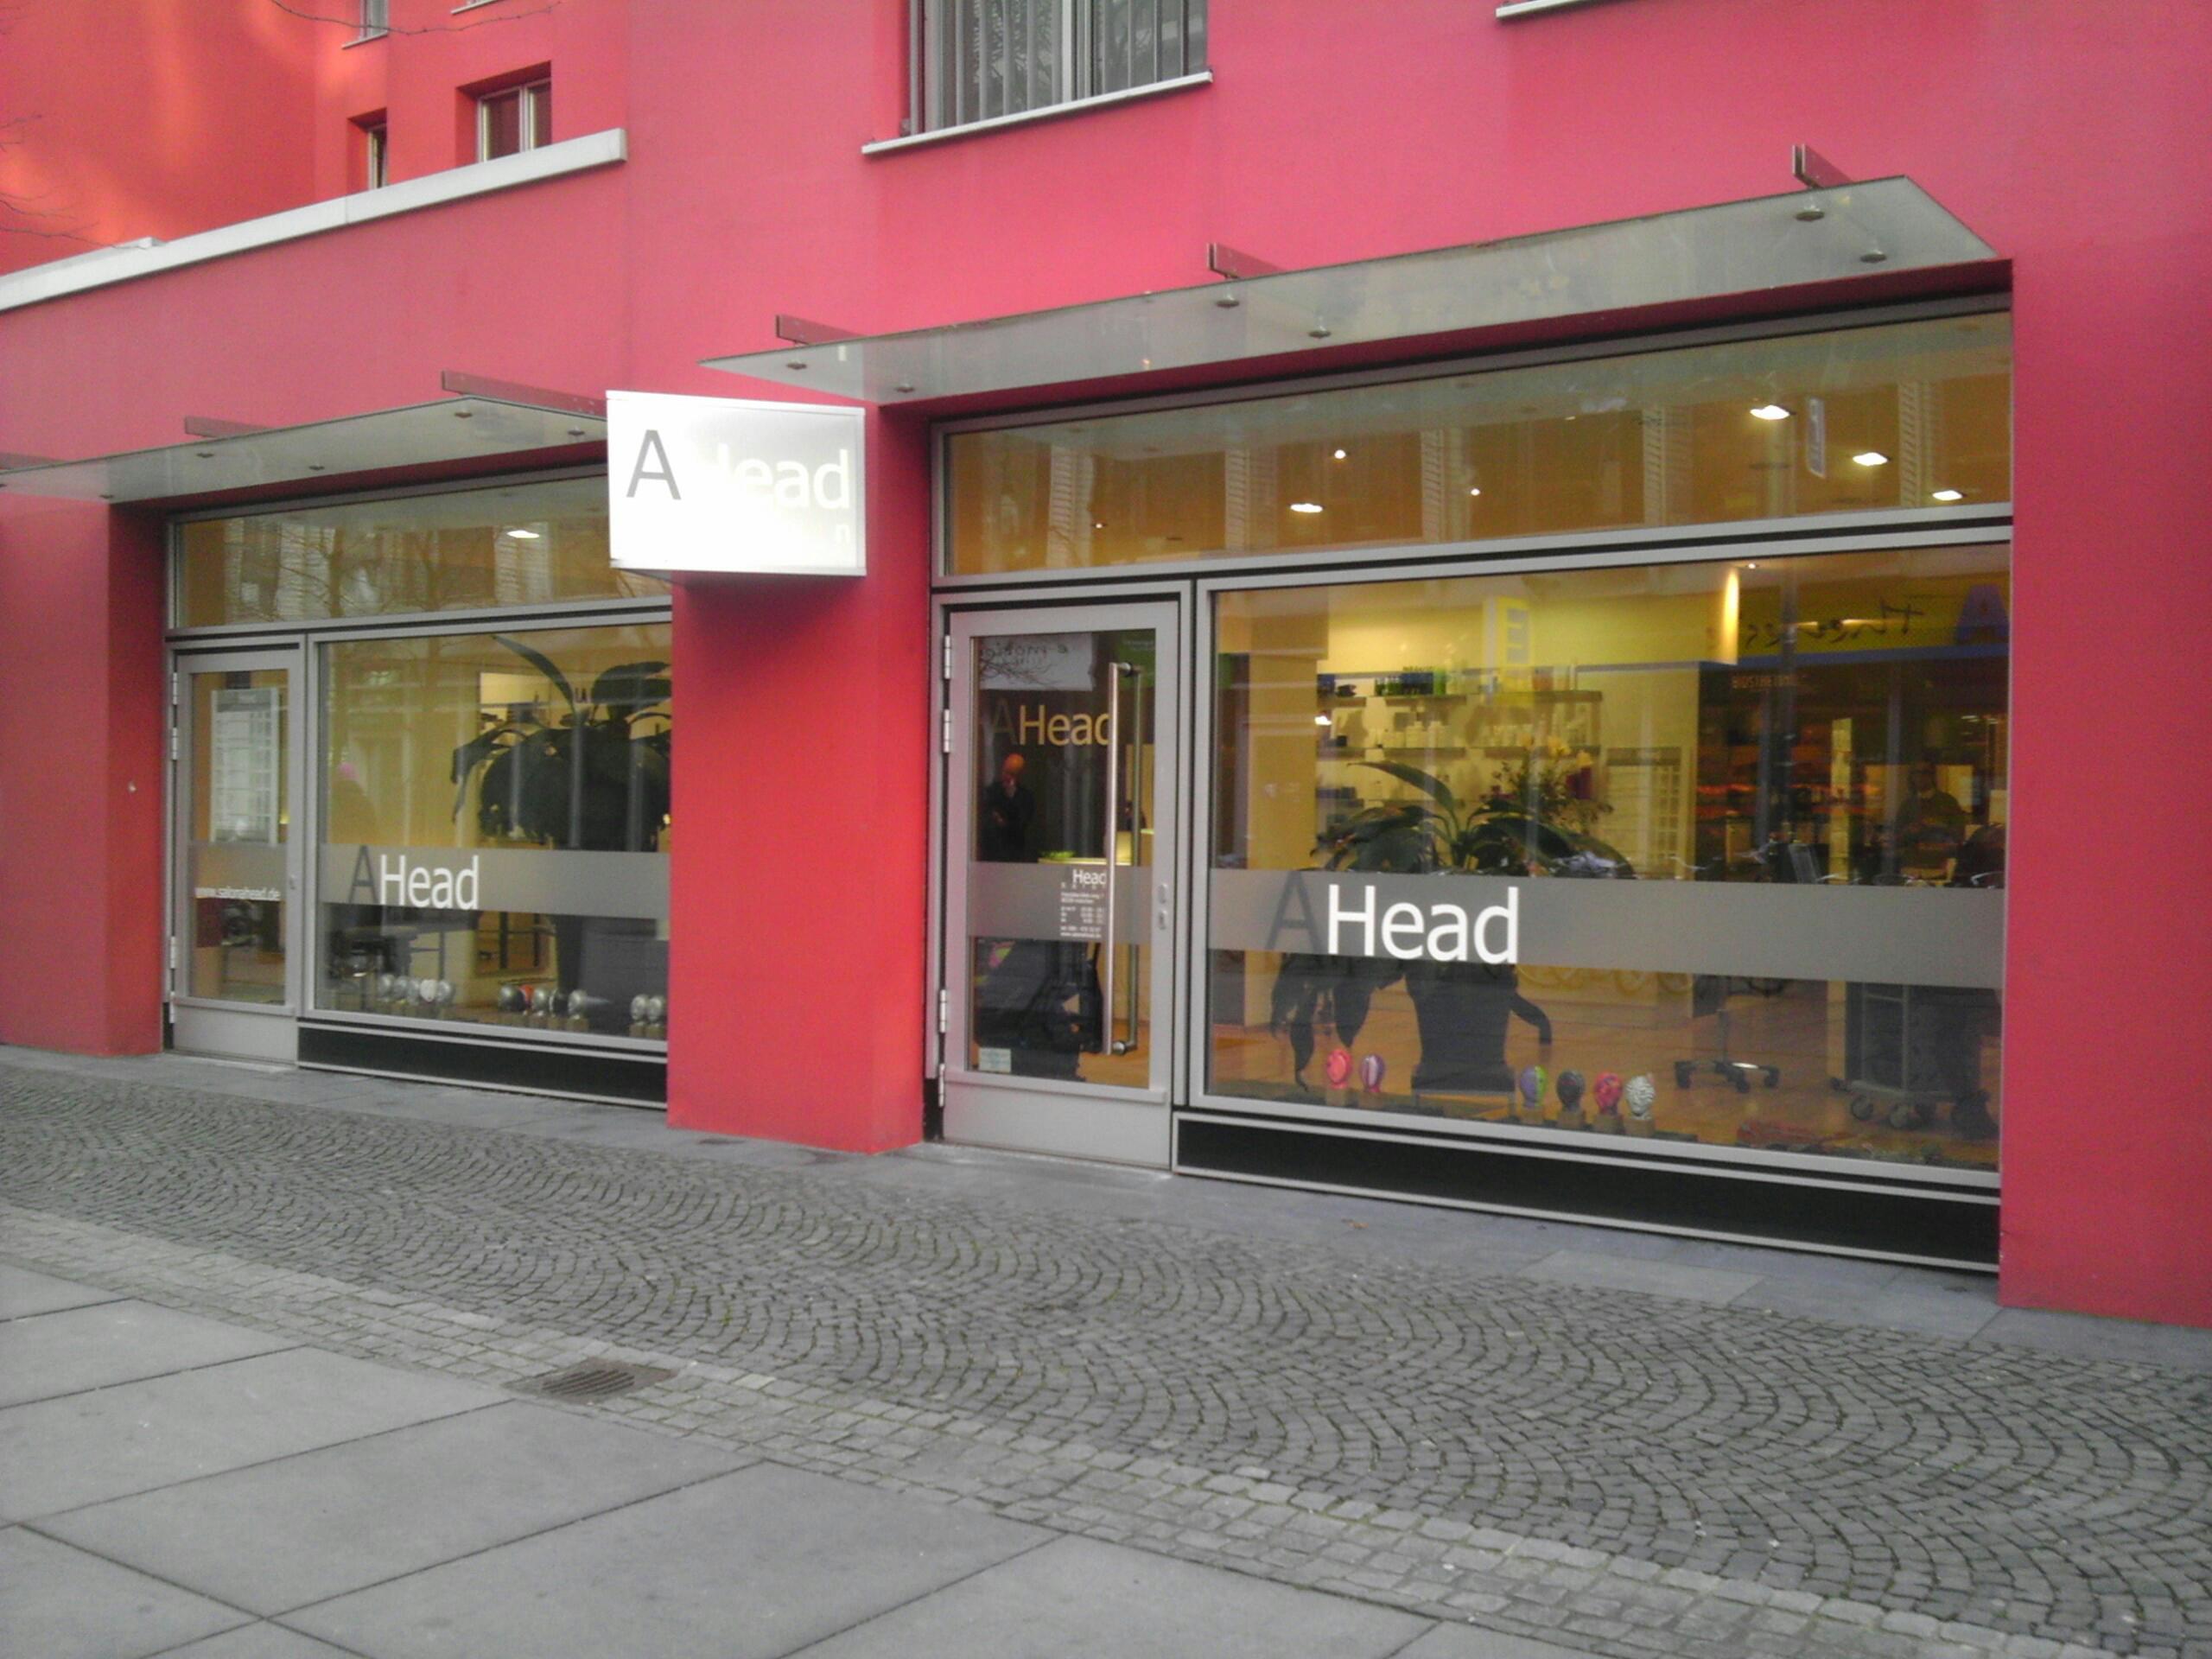 Bild 1 AHead salon in München